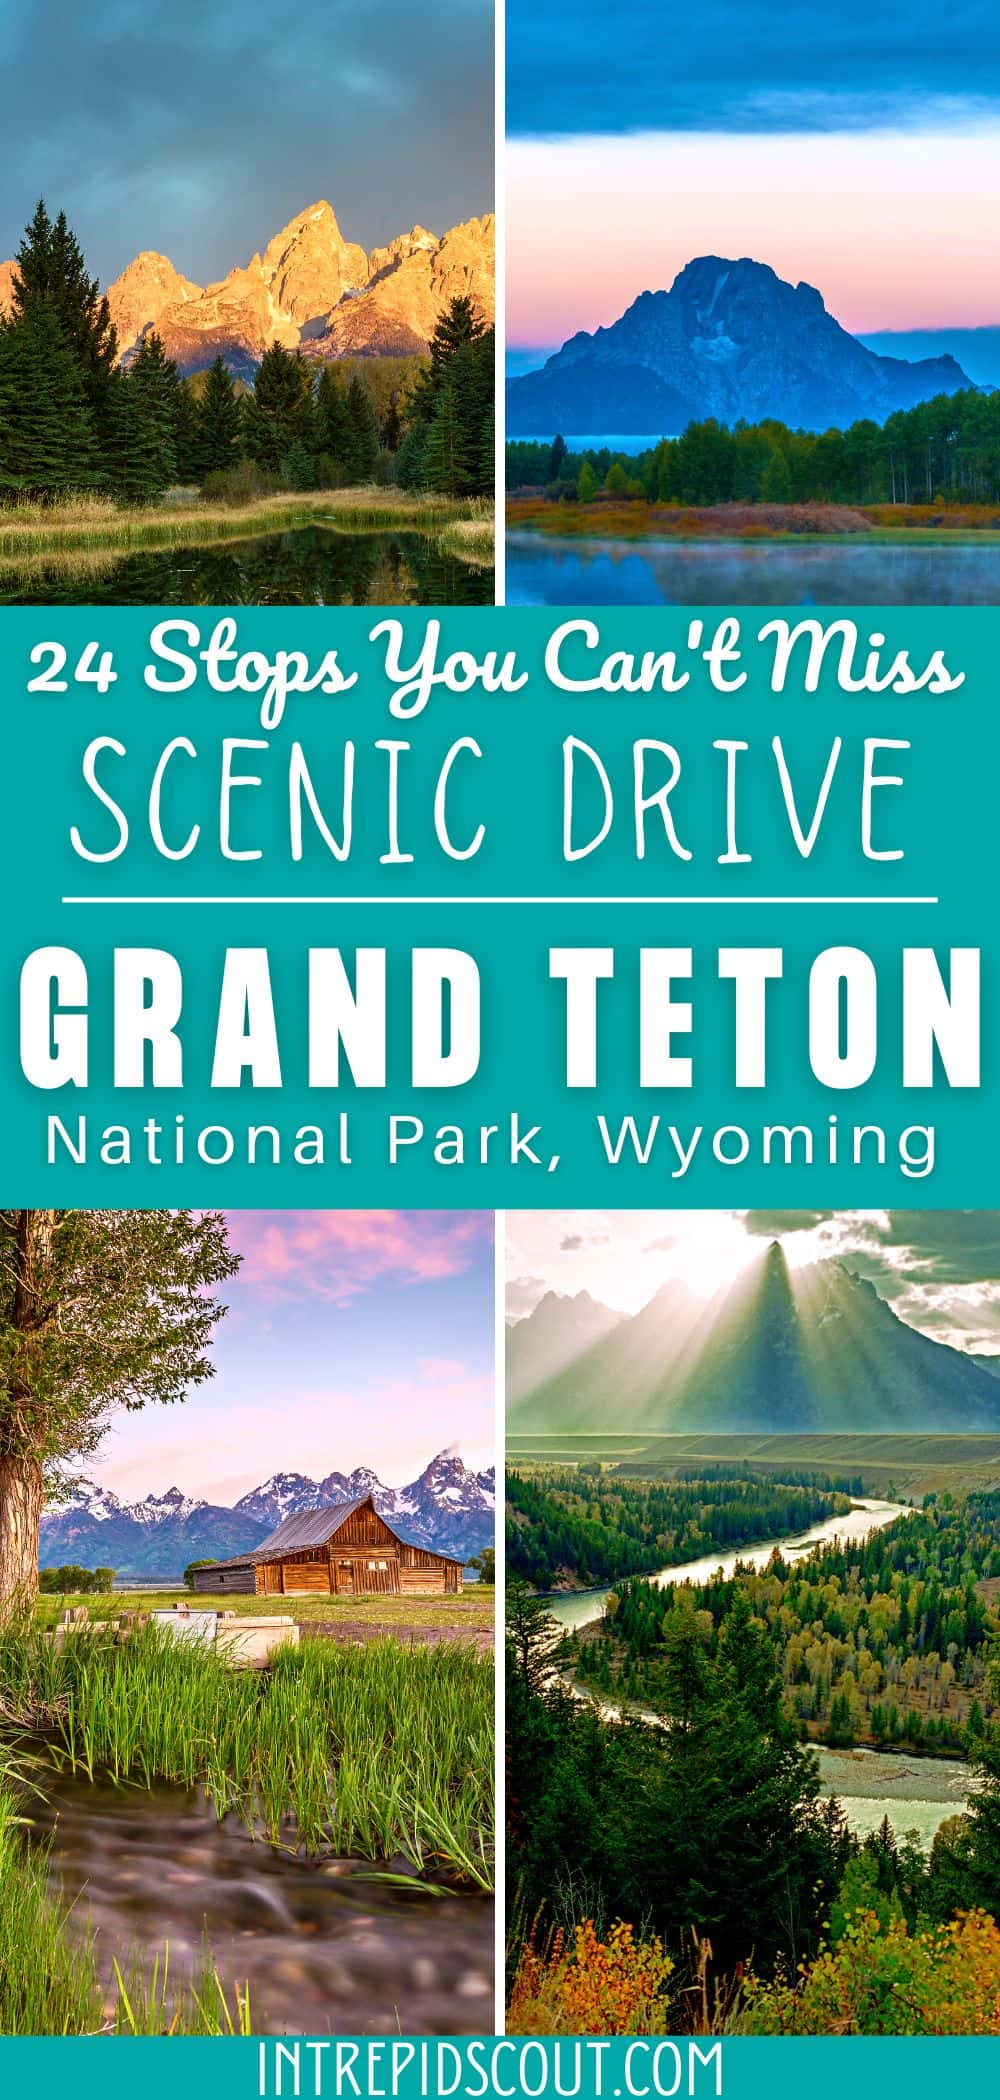 Scenic Loop Drive in Grand Teton